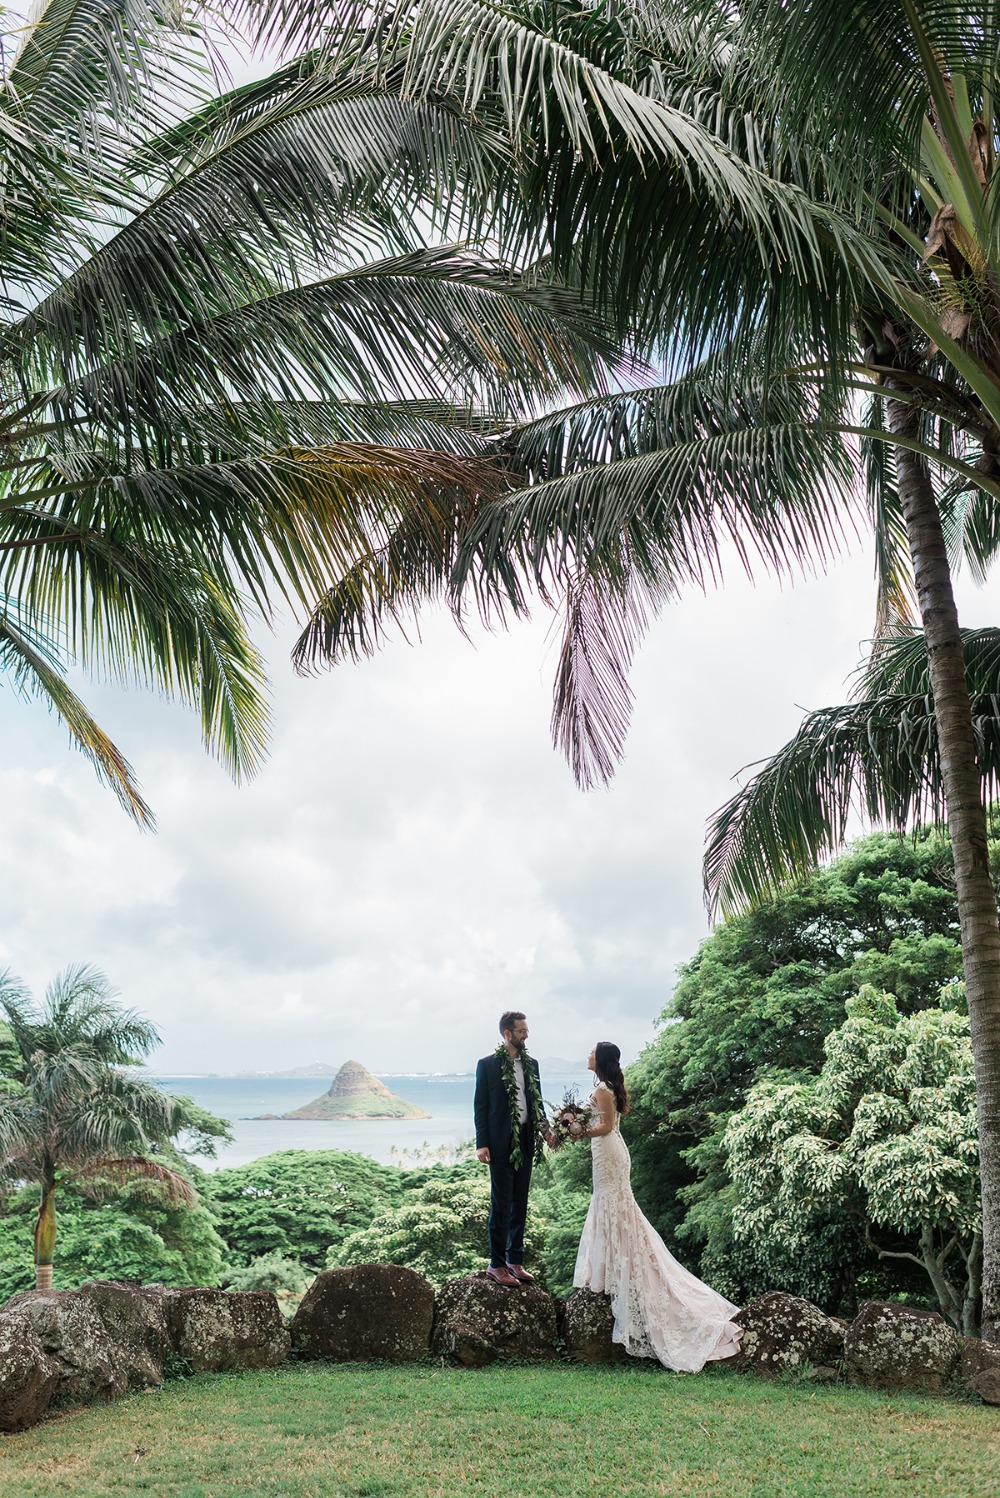 How To Have An Intimate Heartfelt Wedding In Hawaii